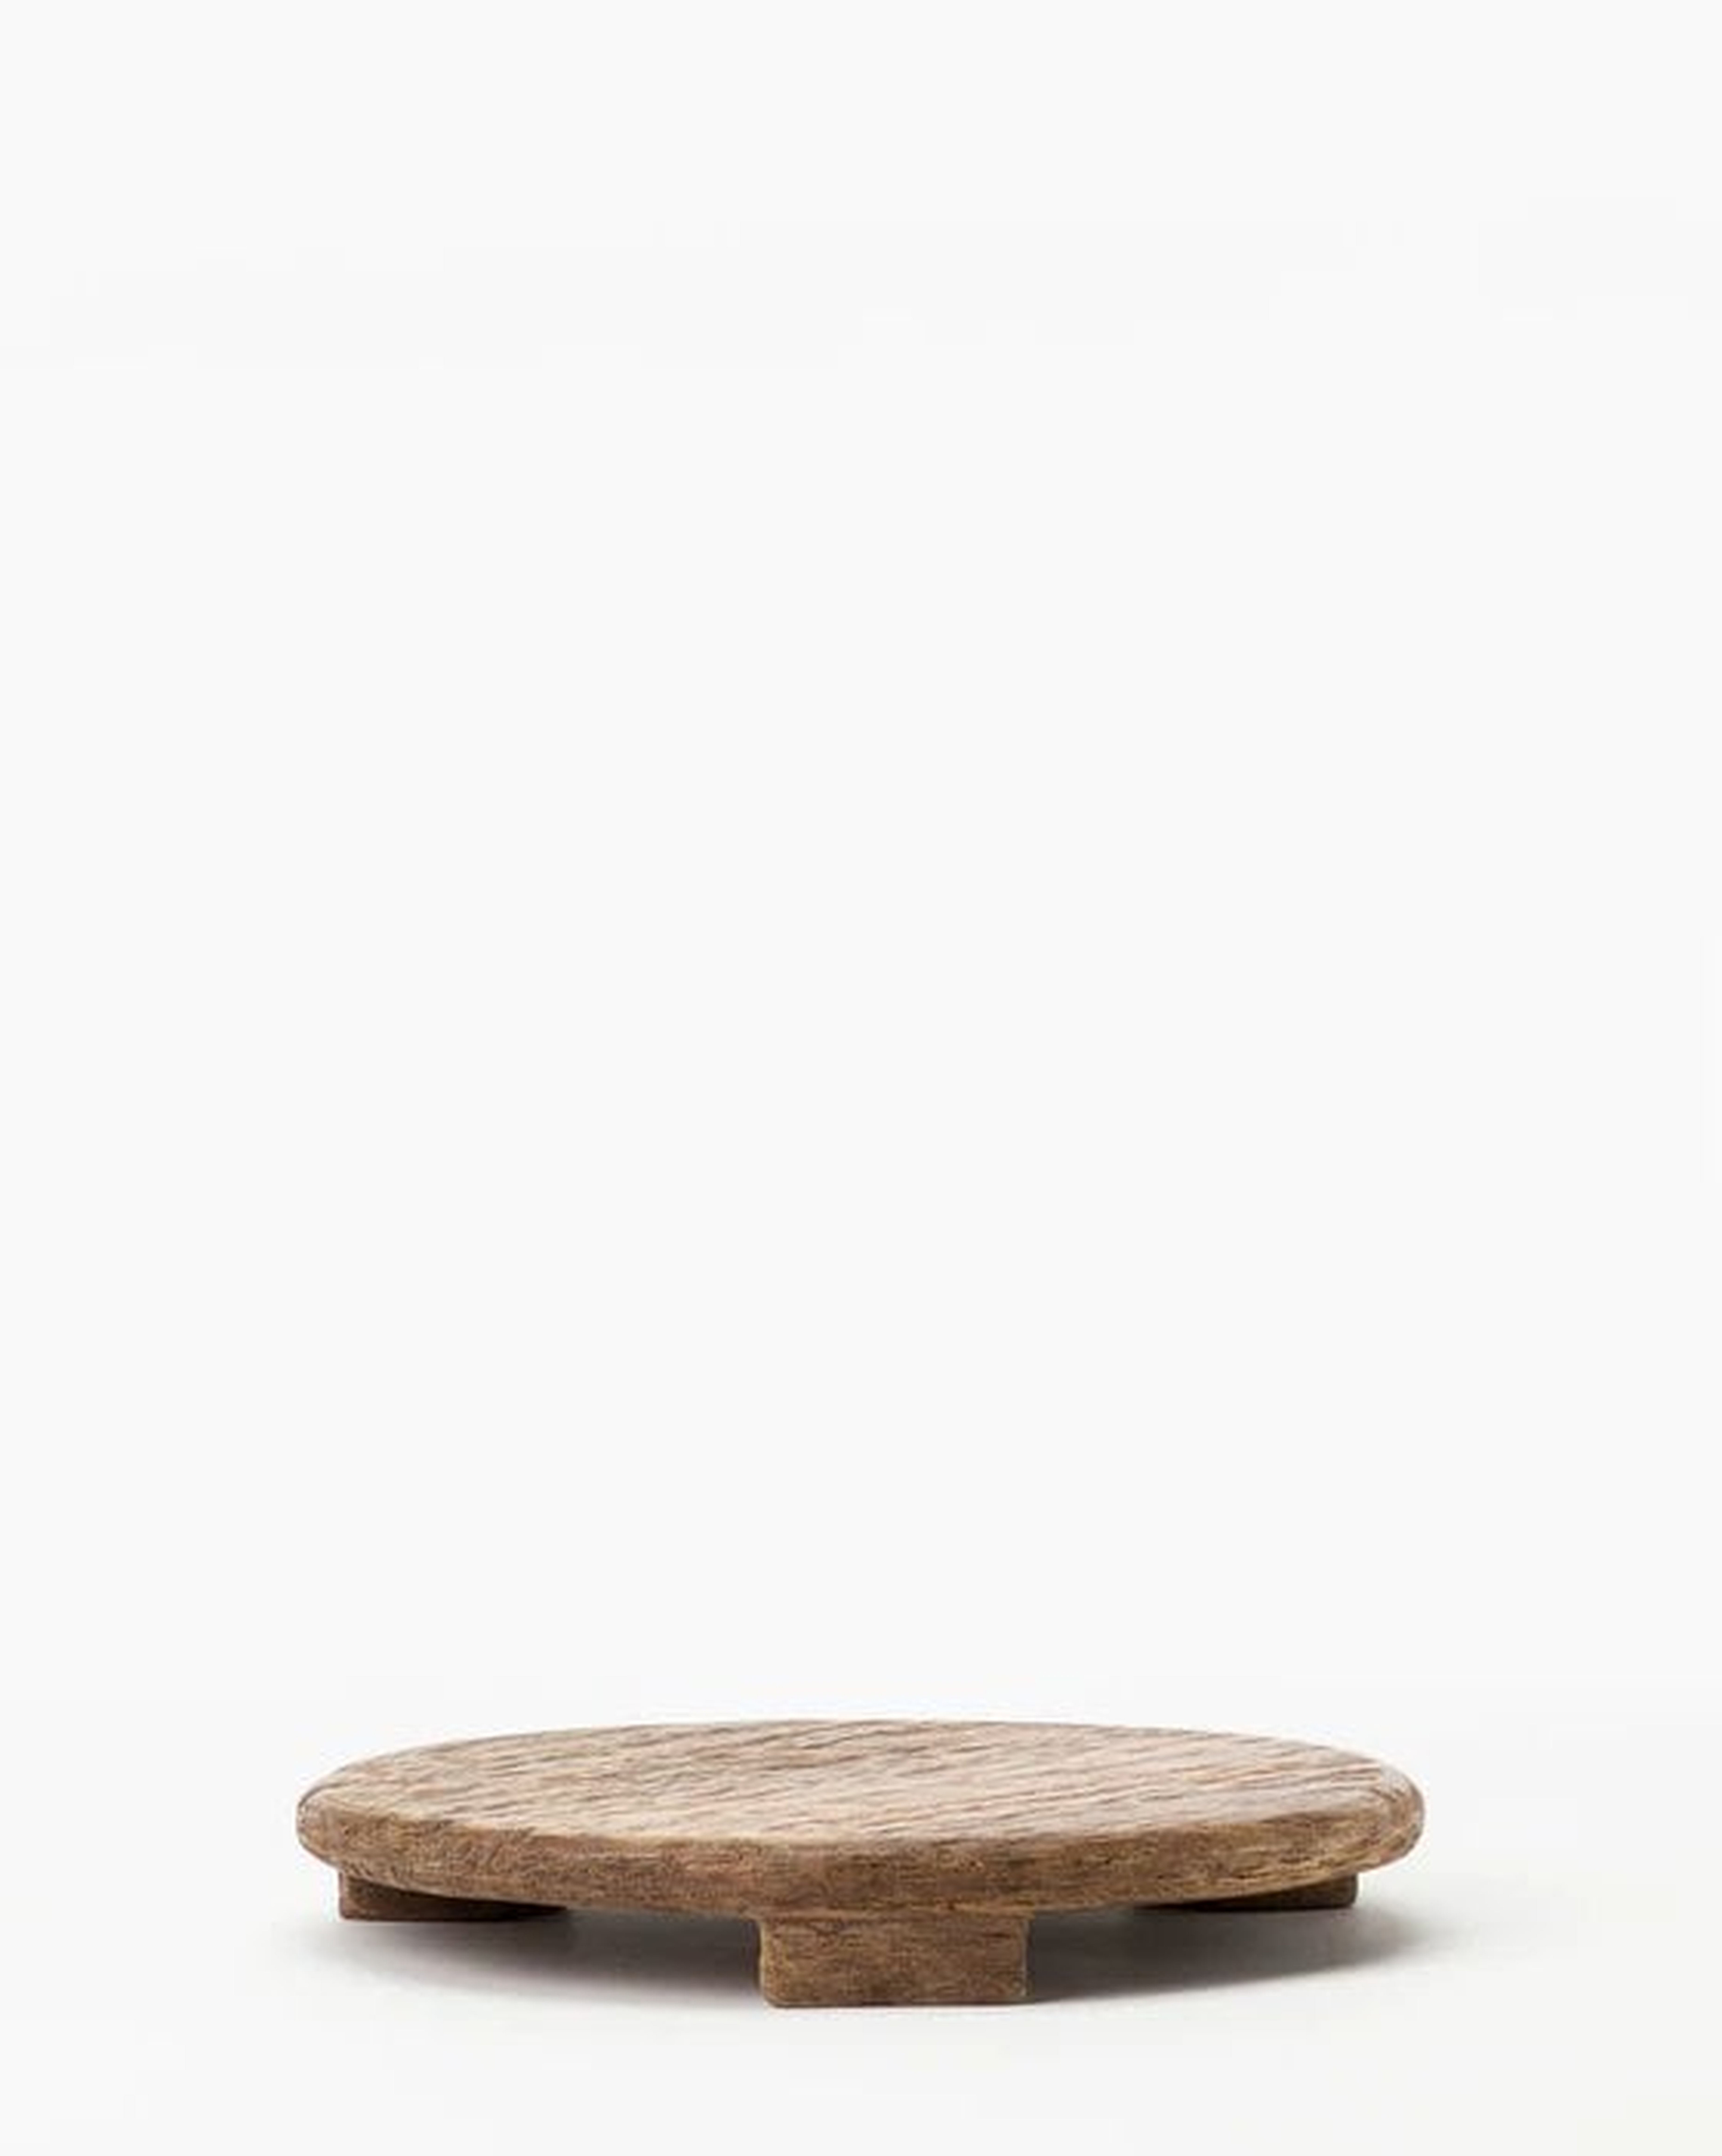 Mango Wood Carved Pedestal MEDIUM - McGee & Co.